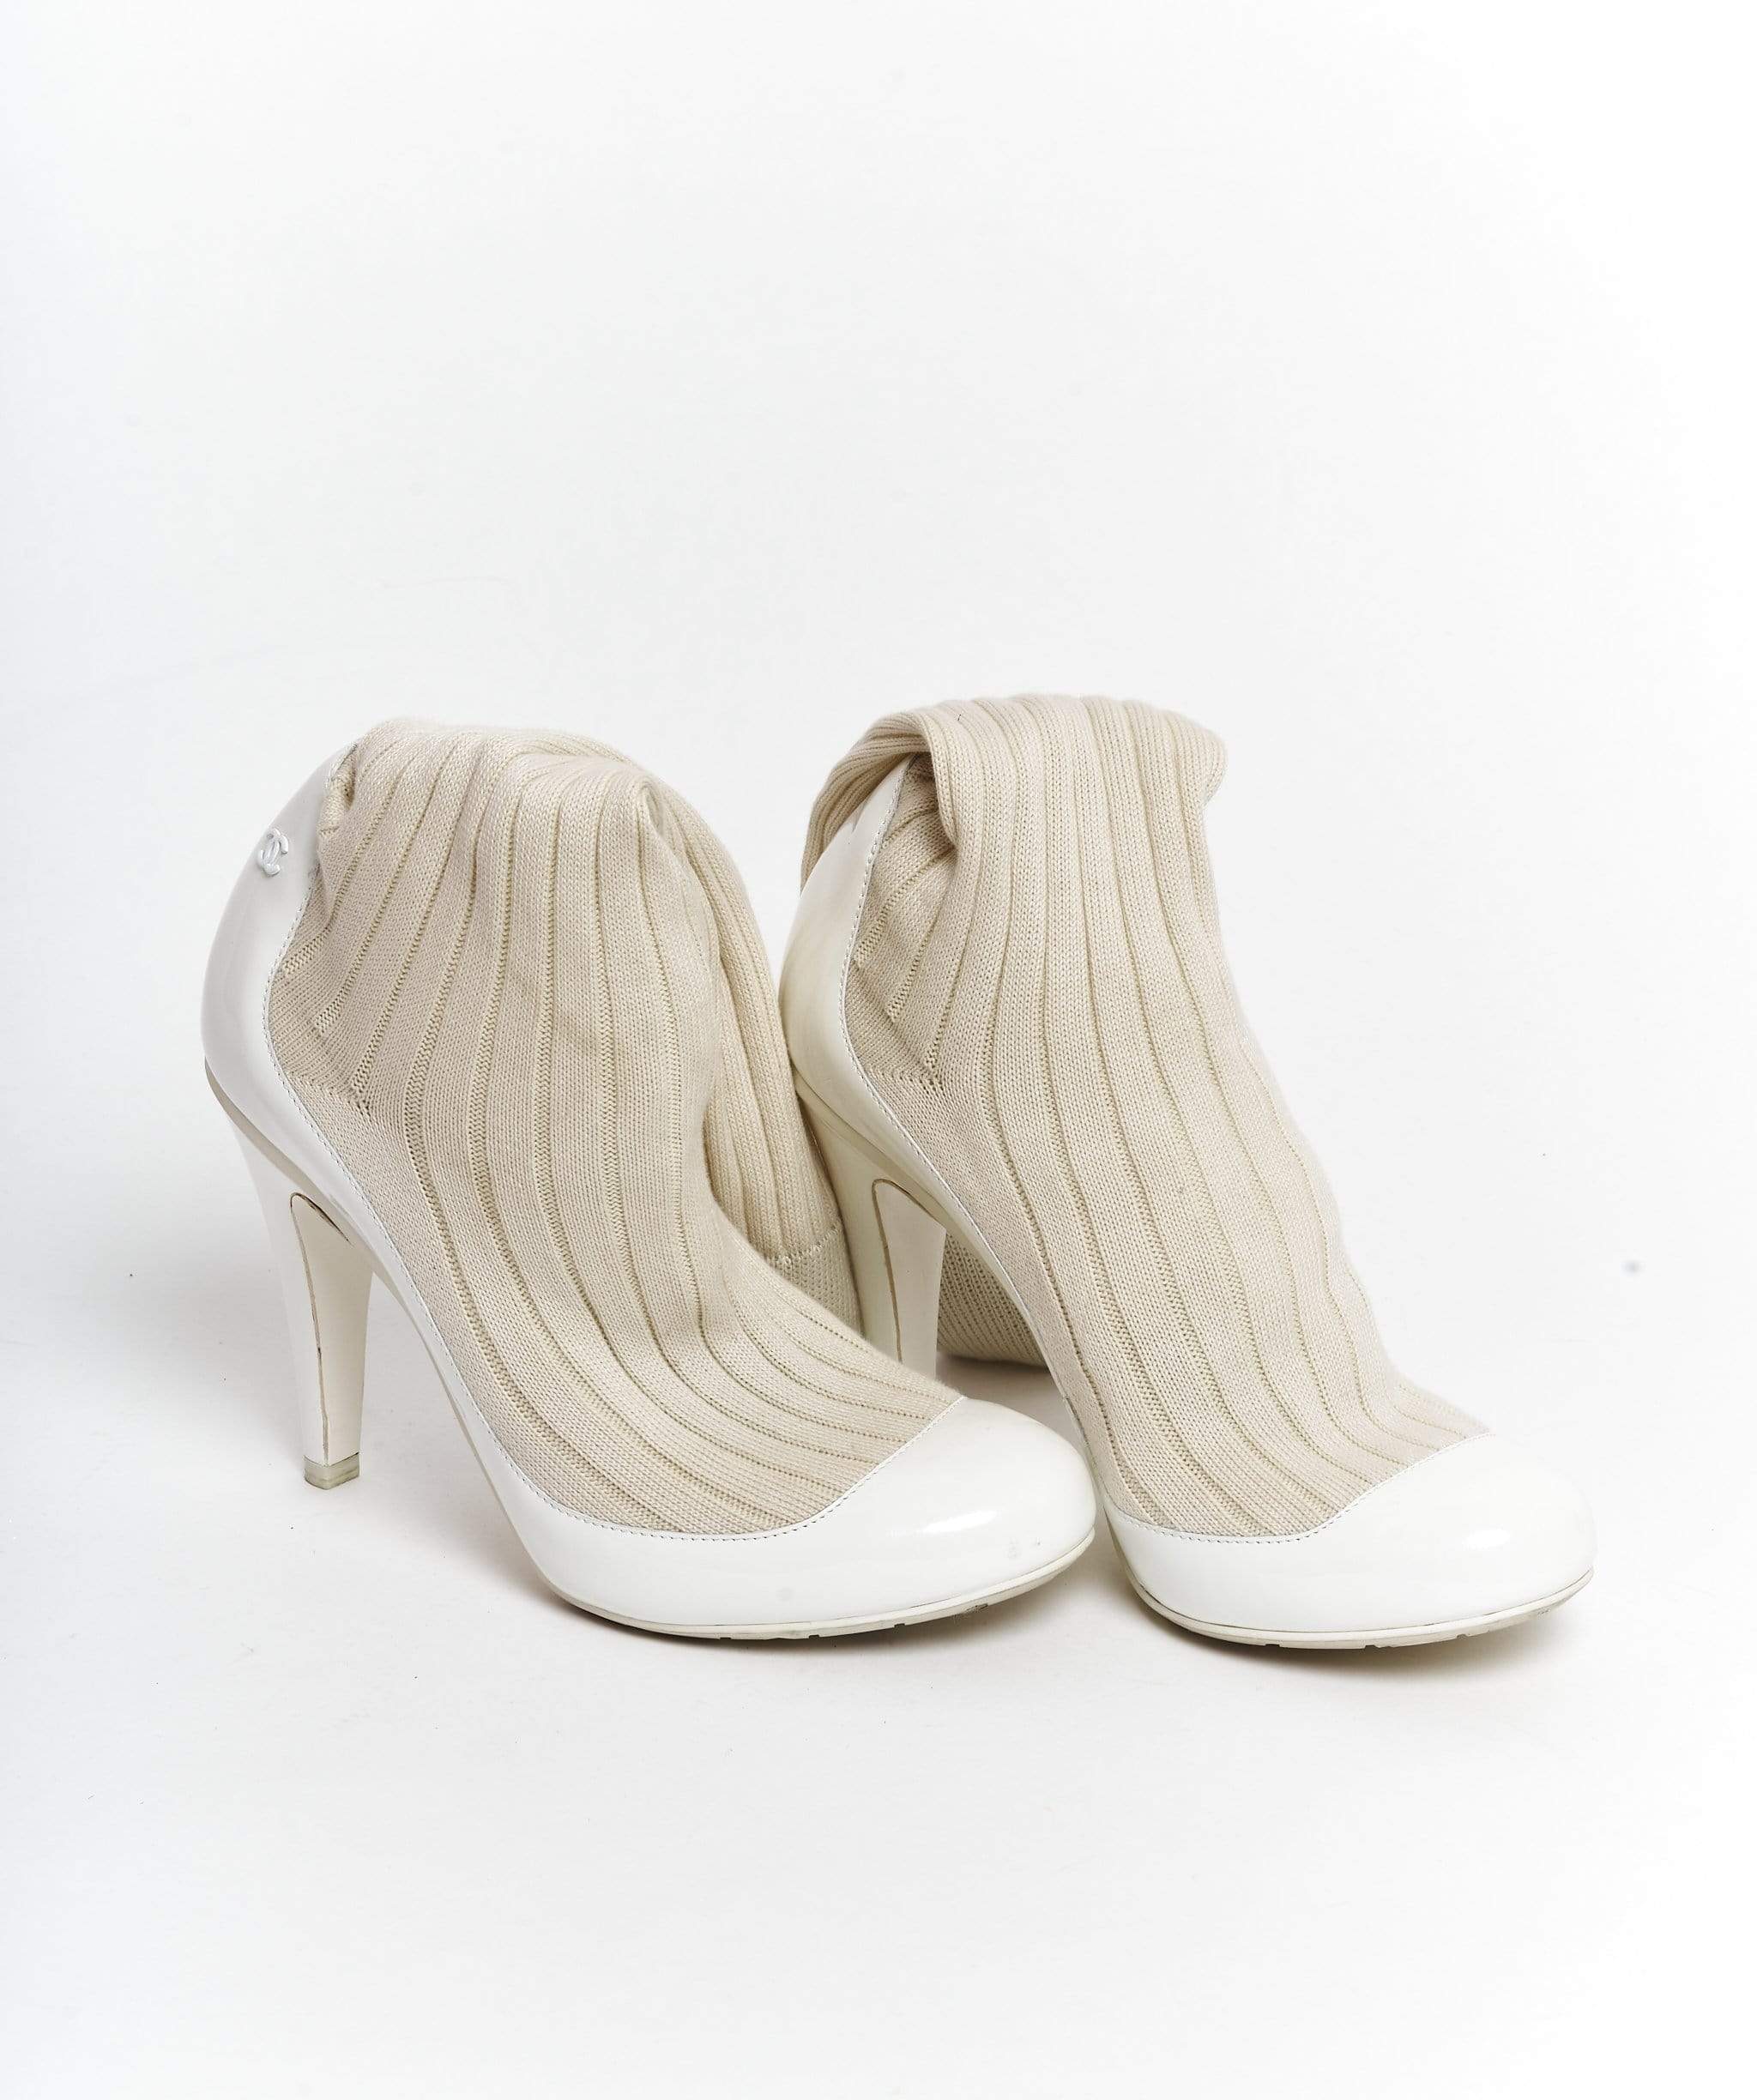 Chanel Chanel sock boots Cream 36.5